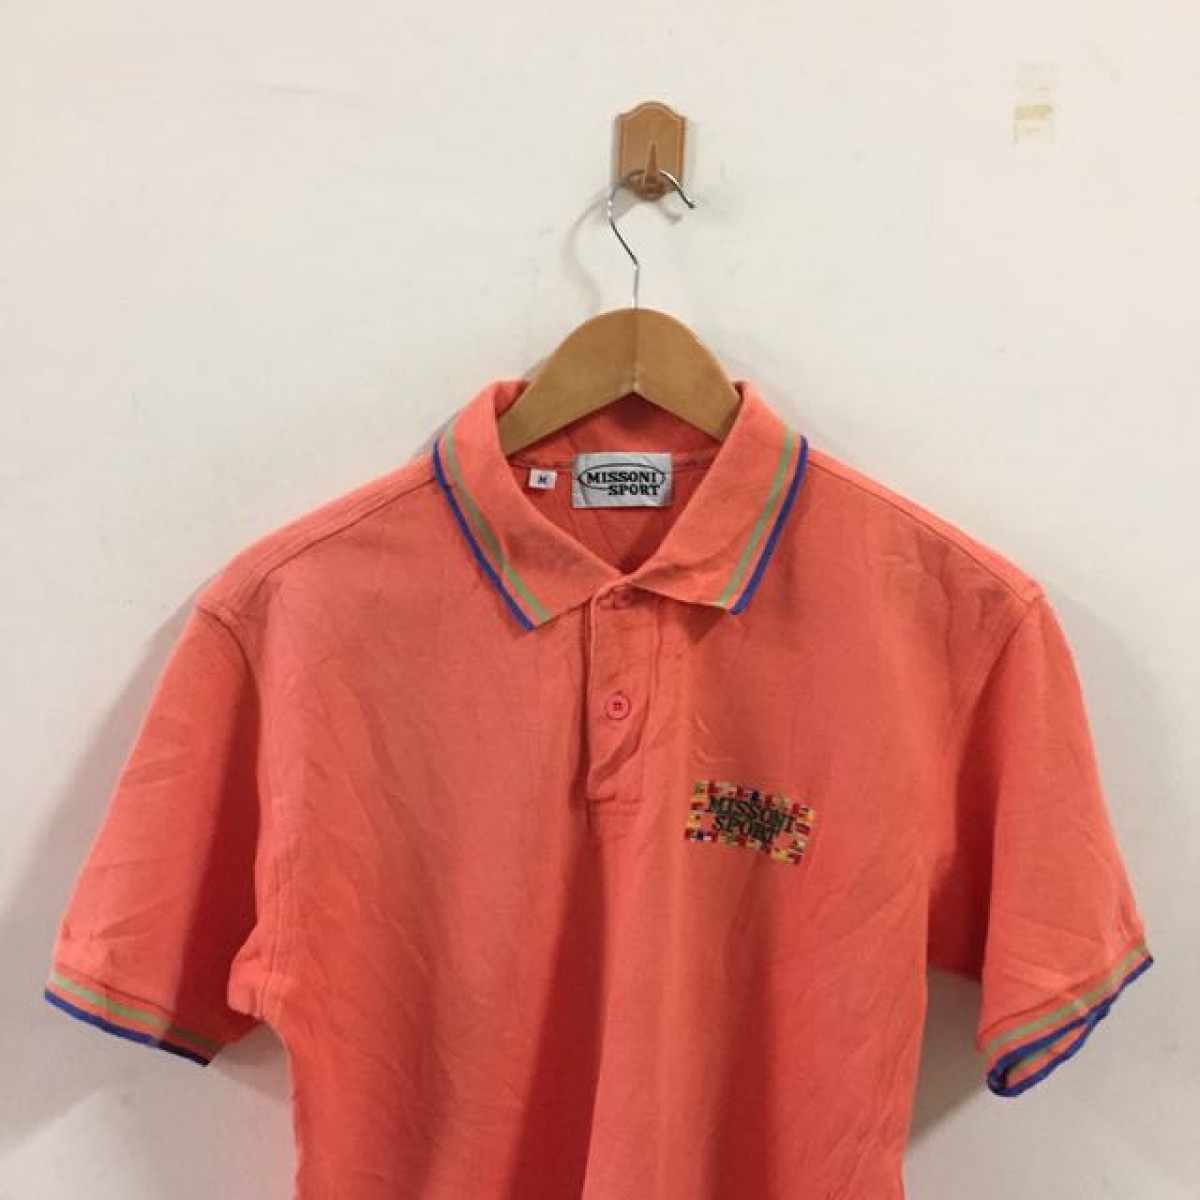 Missoni Sport Polo shirt size m medium orange - 2